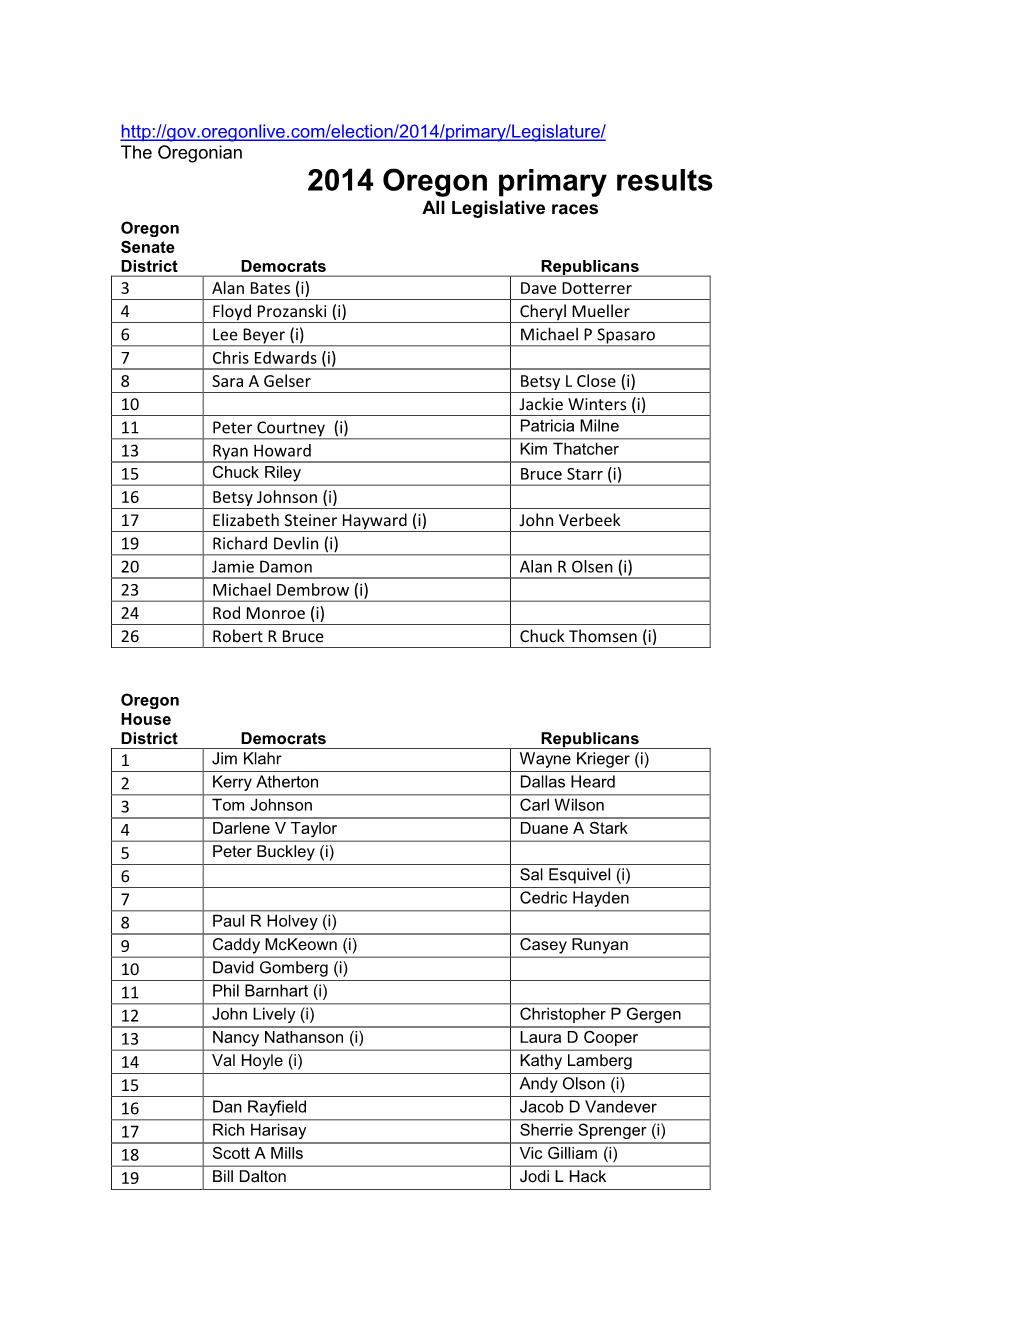 2014 Oregon Primary Results